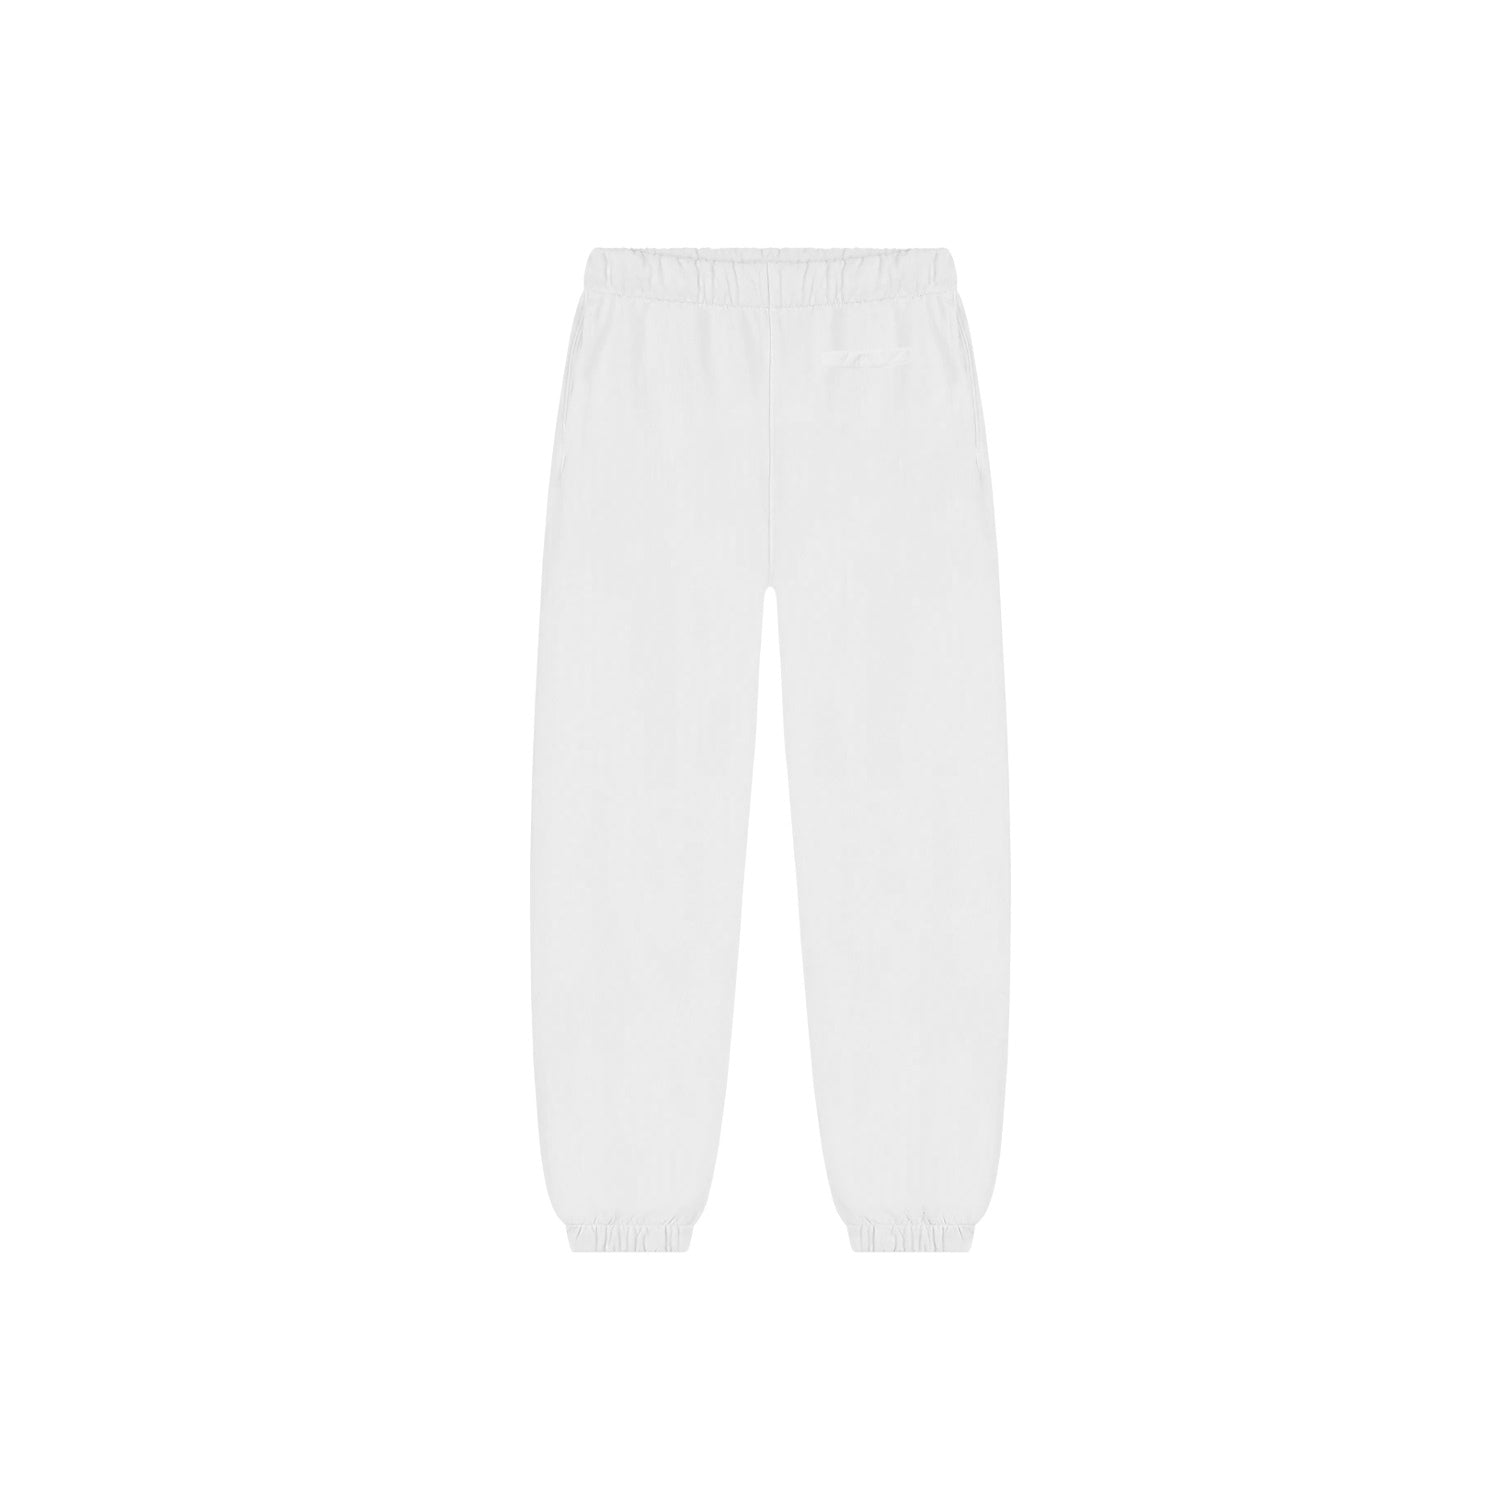 PTC Core White Sweatpants